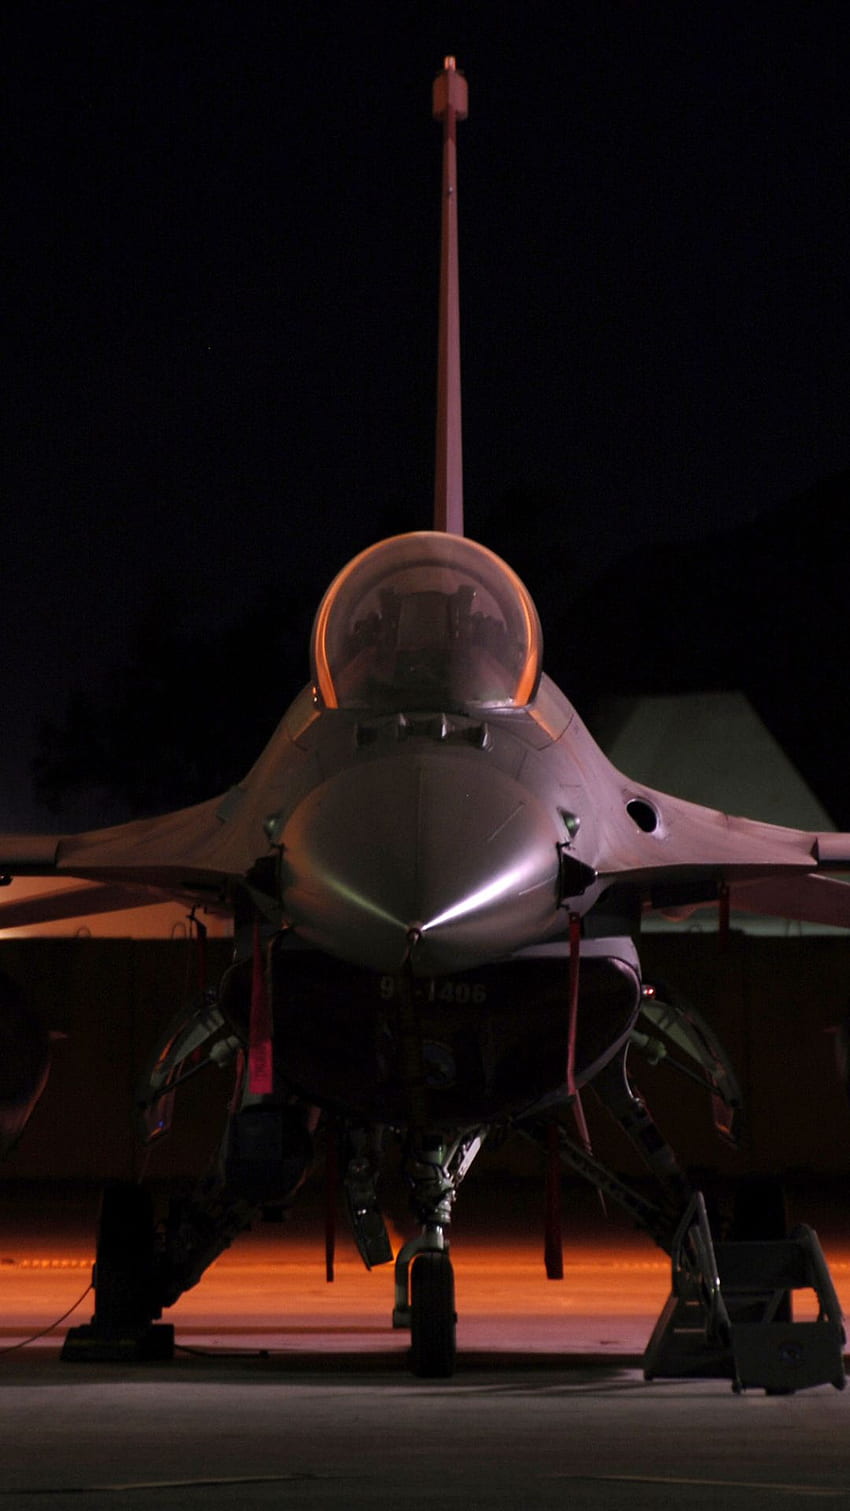 Militar / General Dynamics F 16 Fighting Falcon () Móvil. Aviones De Combate, Aviones De Combate, Aviones De Combate fondo de pantalla del teléfono